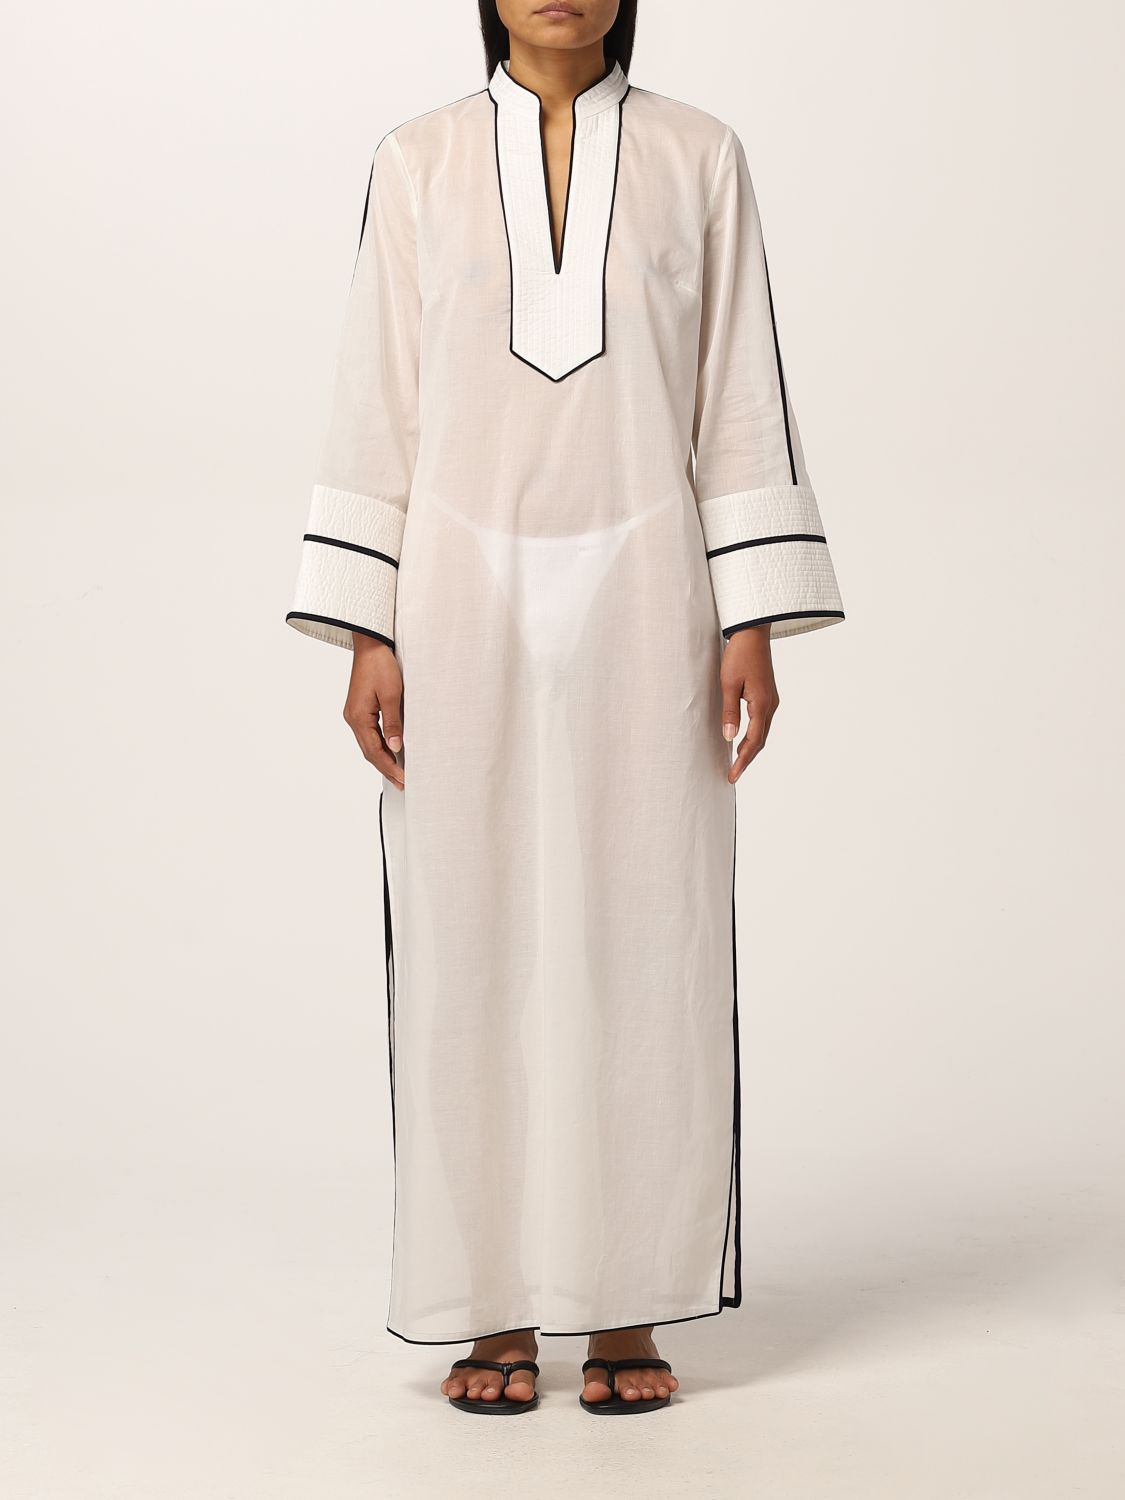 TORY BURCH: dress for women - White | Tory Burch dress 84553 online on  